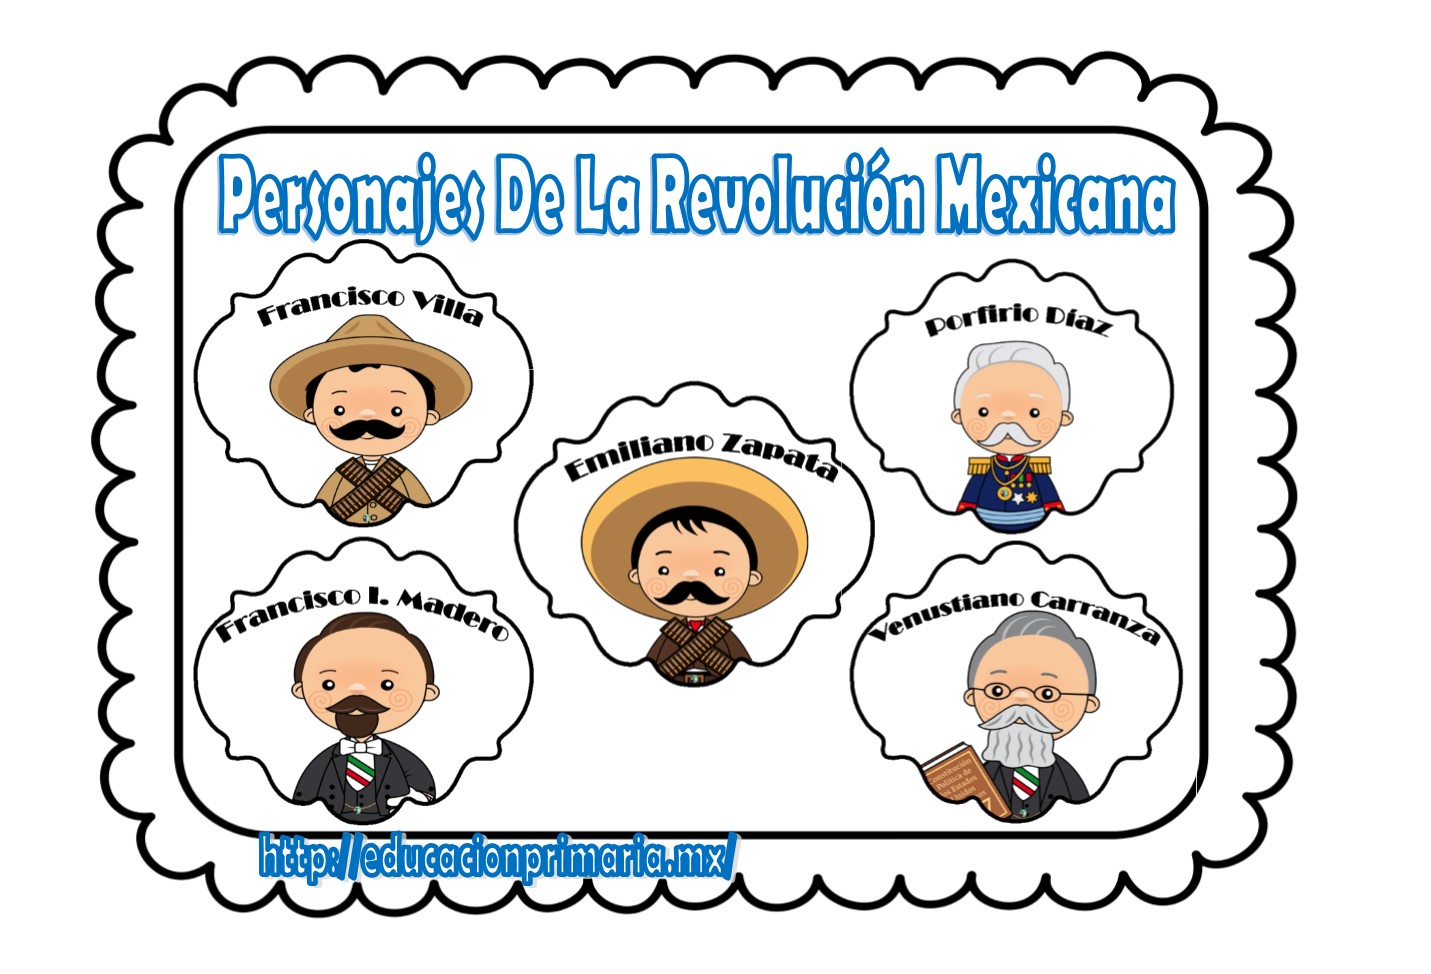 PersonajesRevolucionMexico1